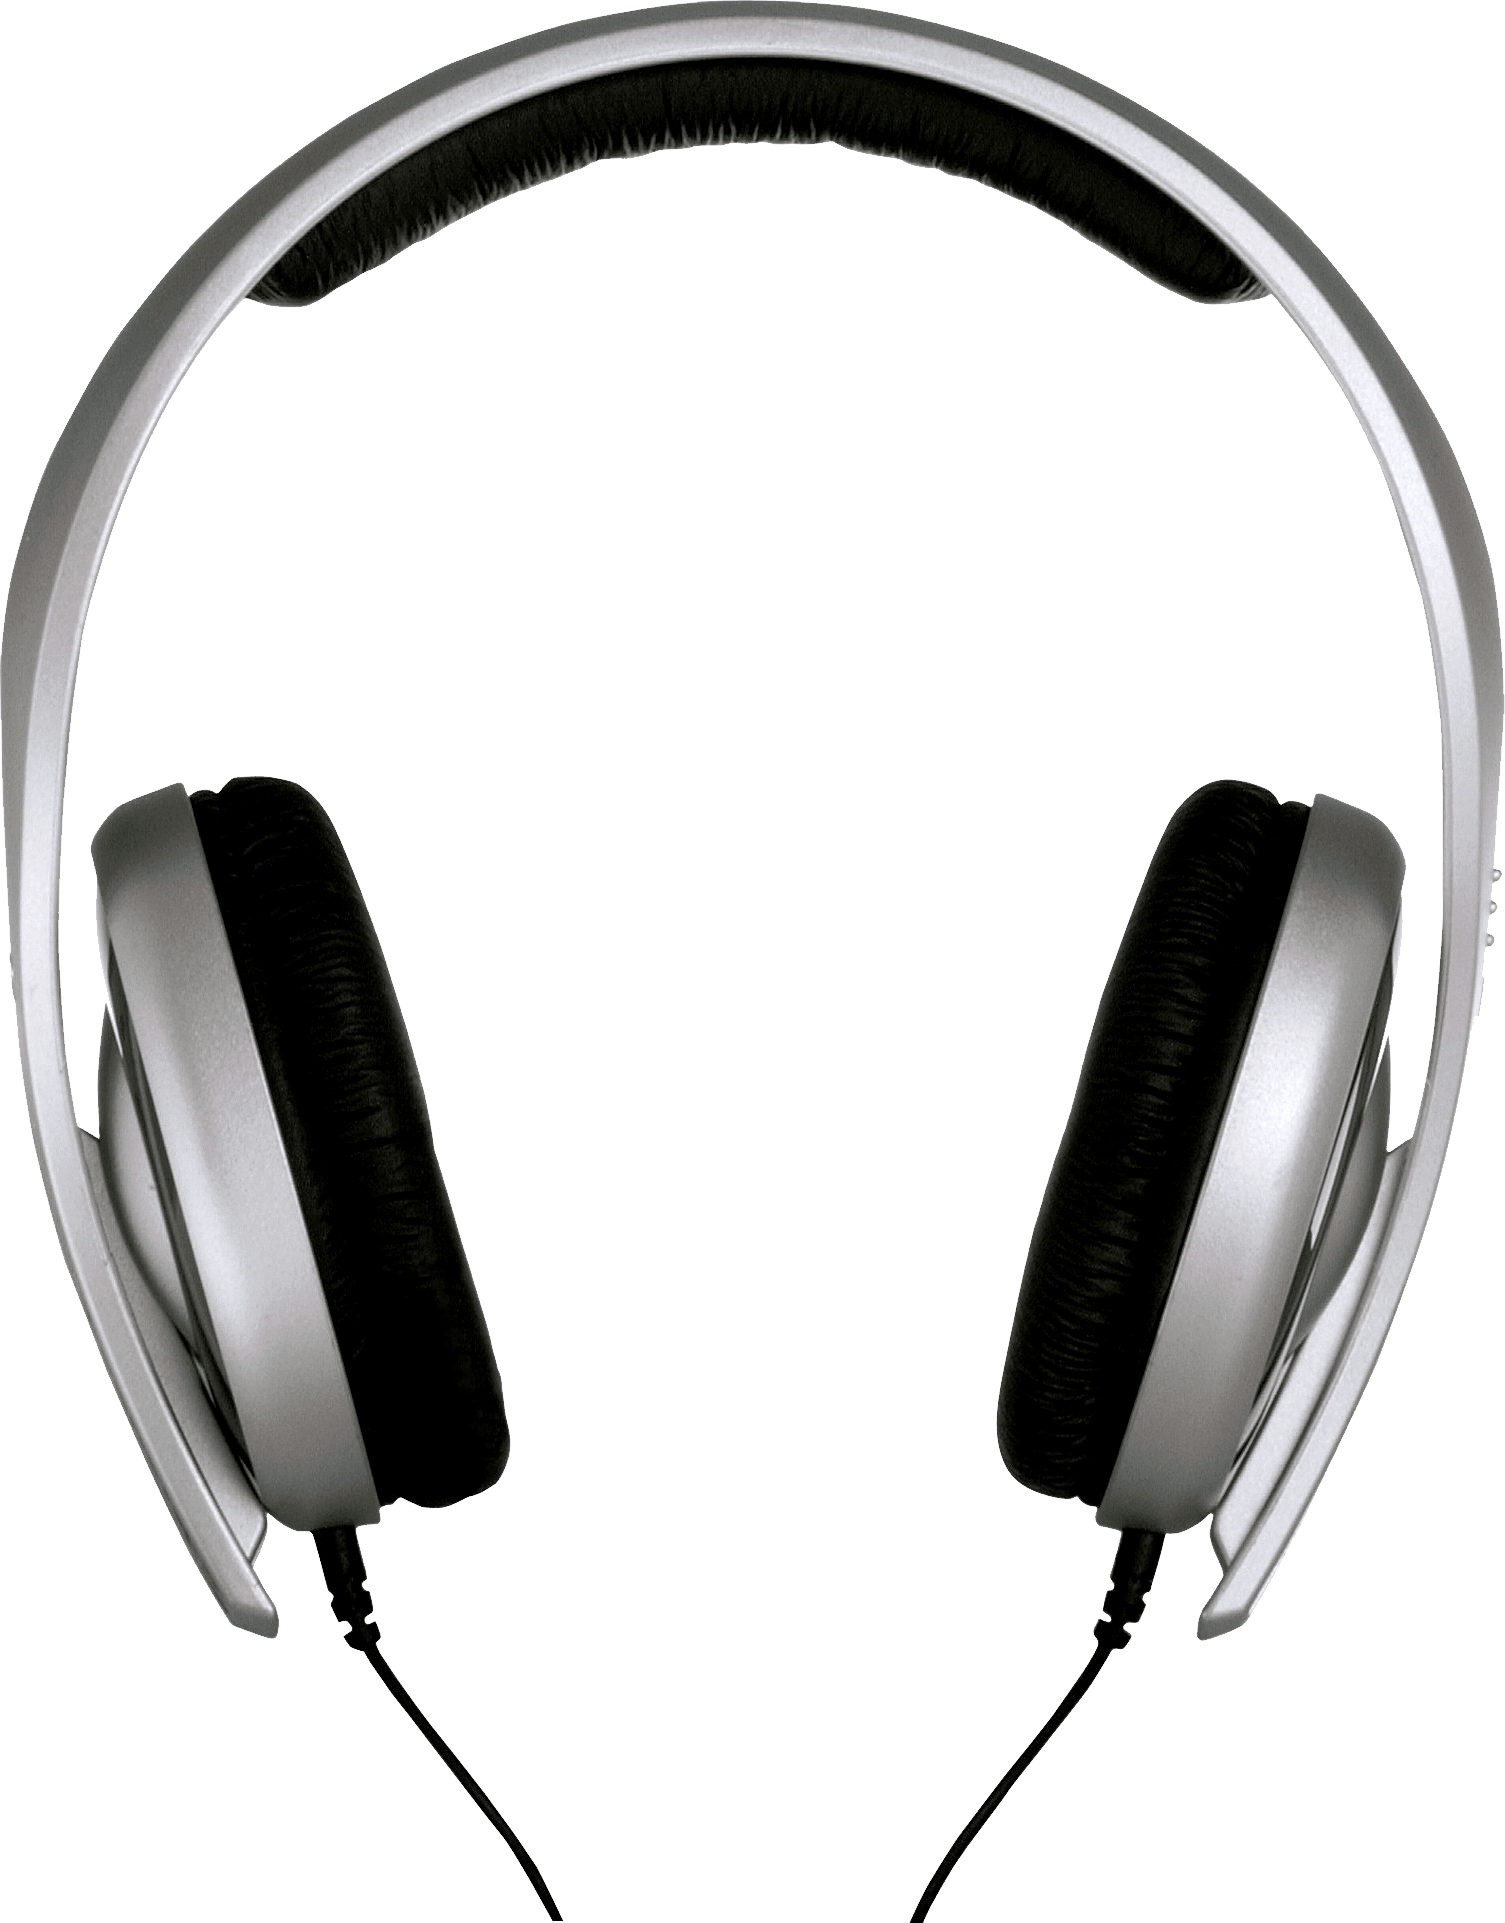 headphone clipart black and white